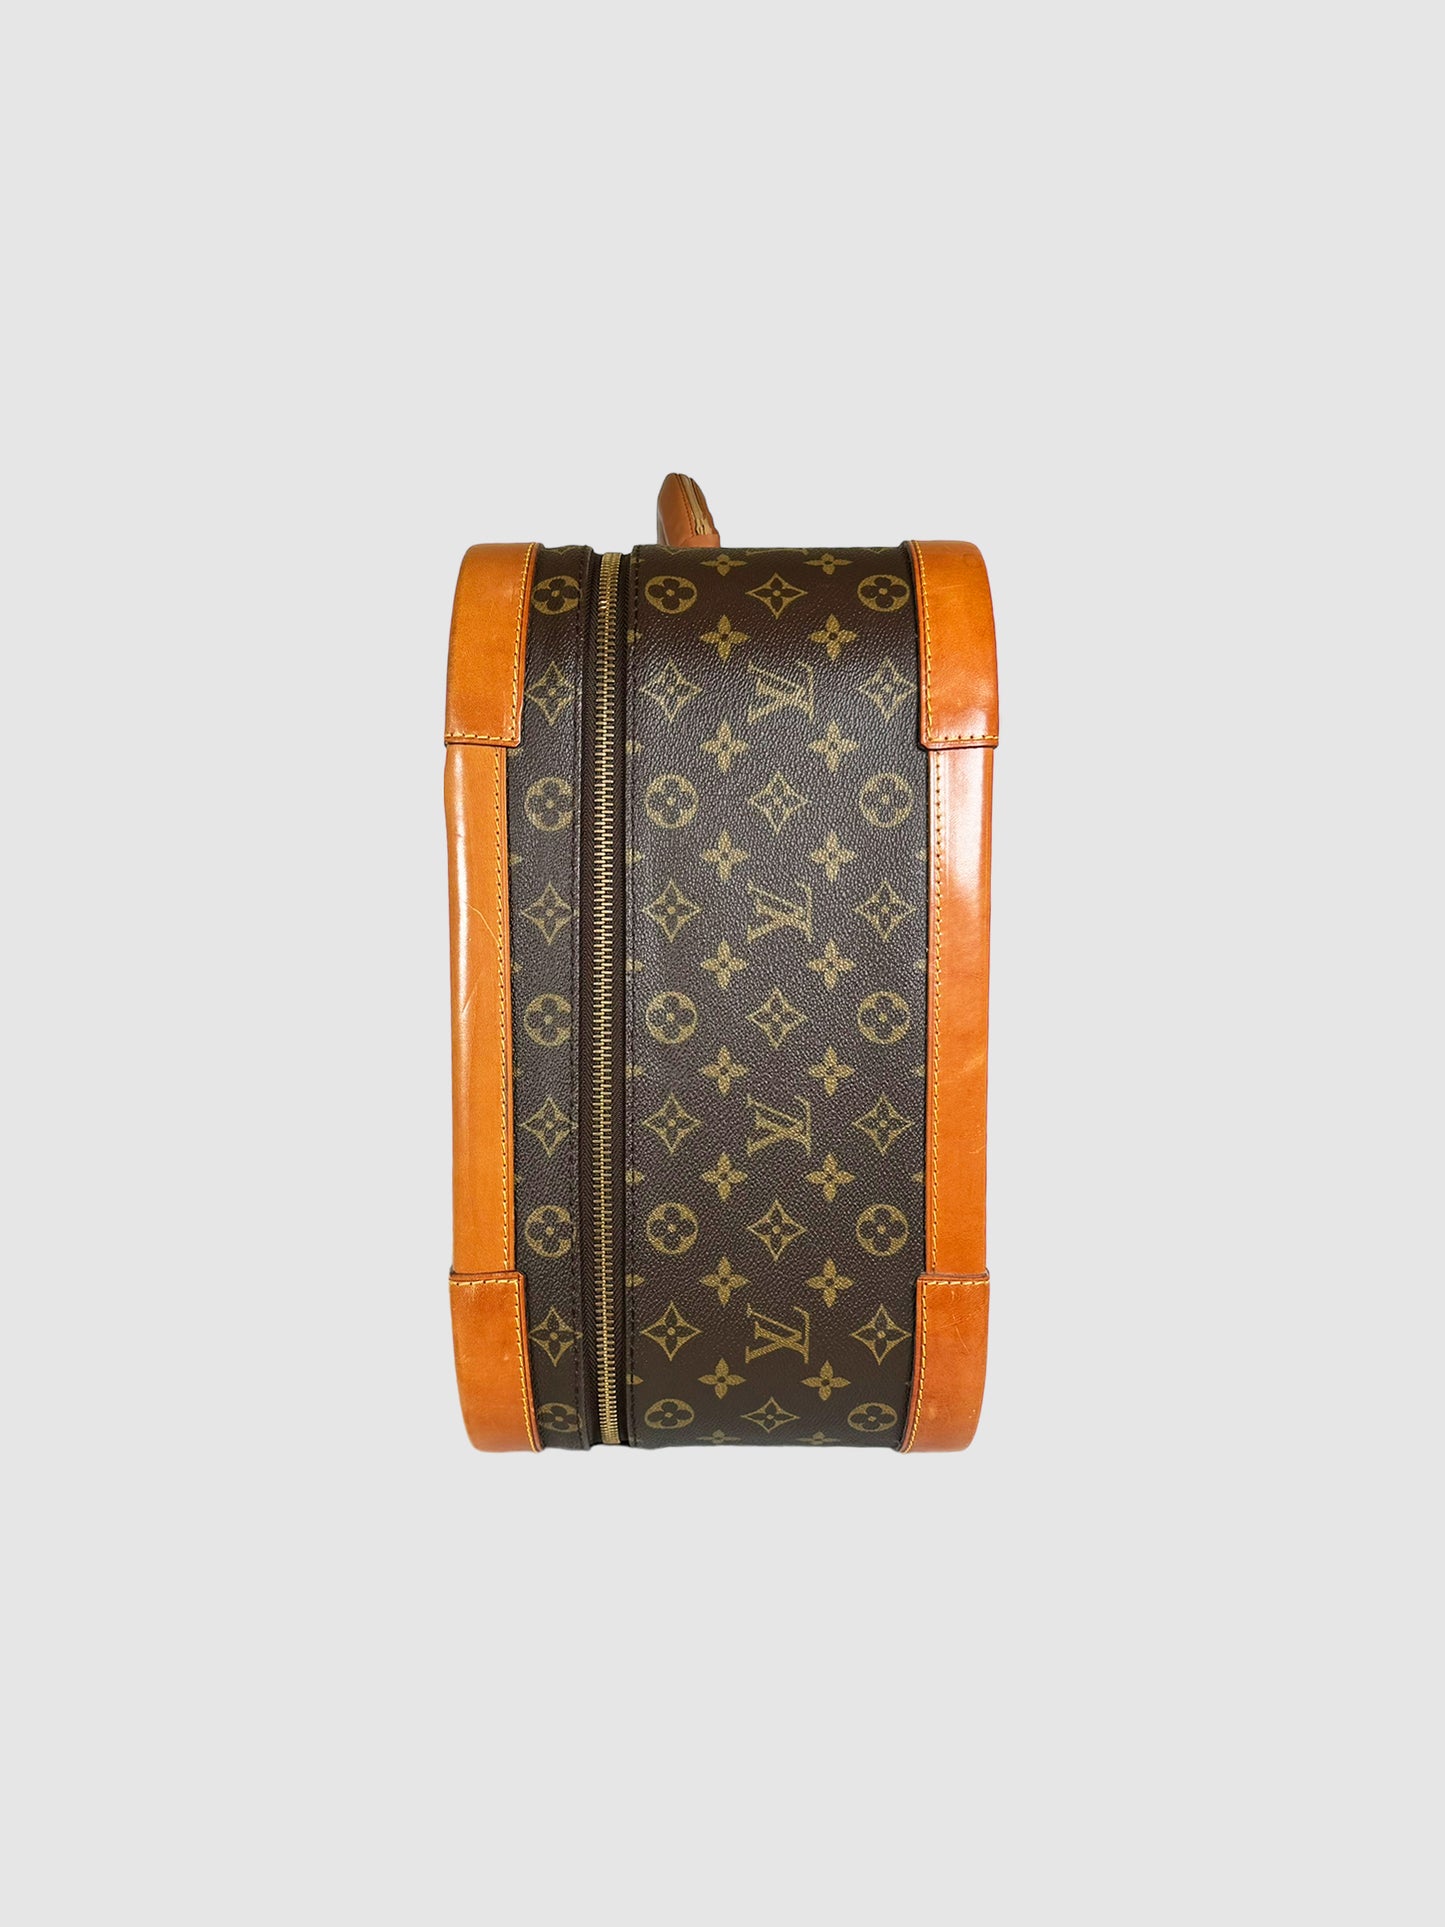 Monogram Leather Suitcase